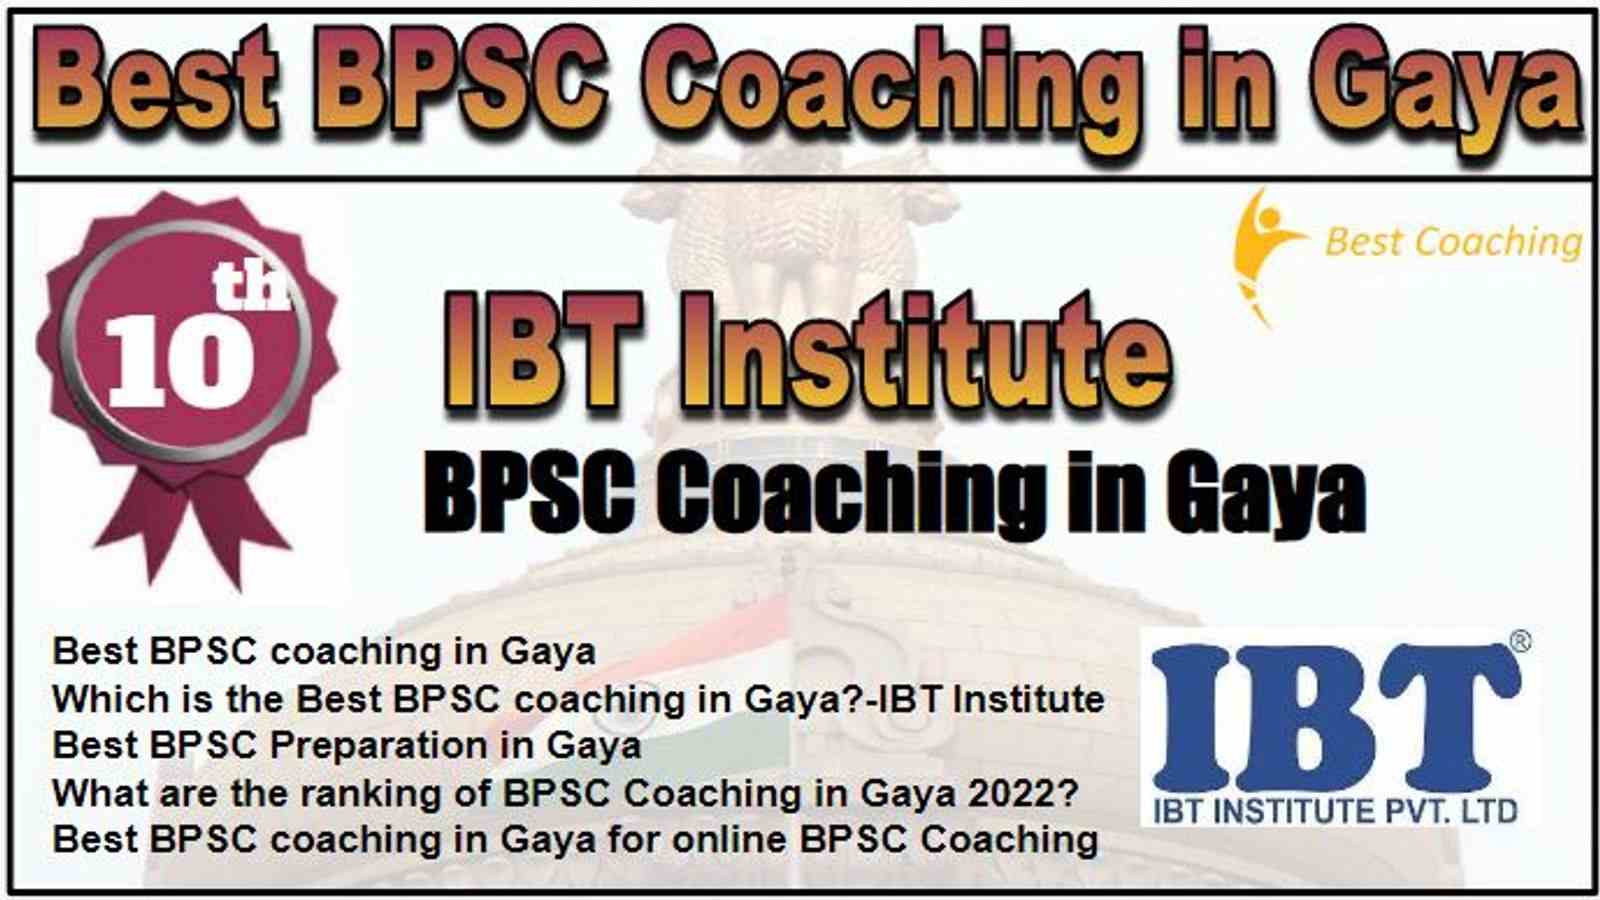 Rank 10 Best BPSC Coaching in Gaya